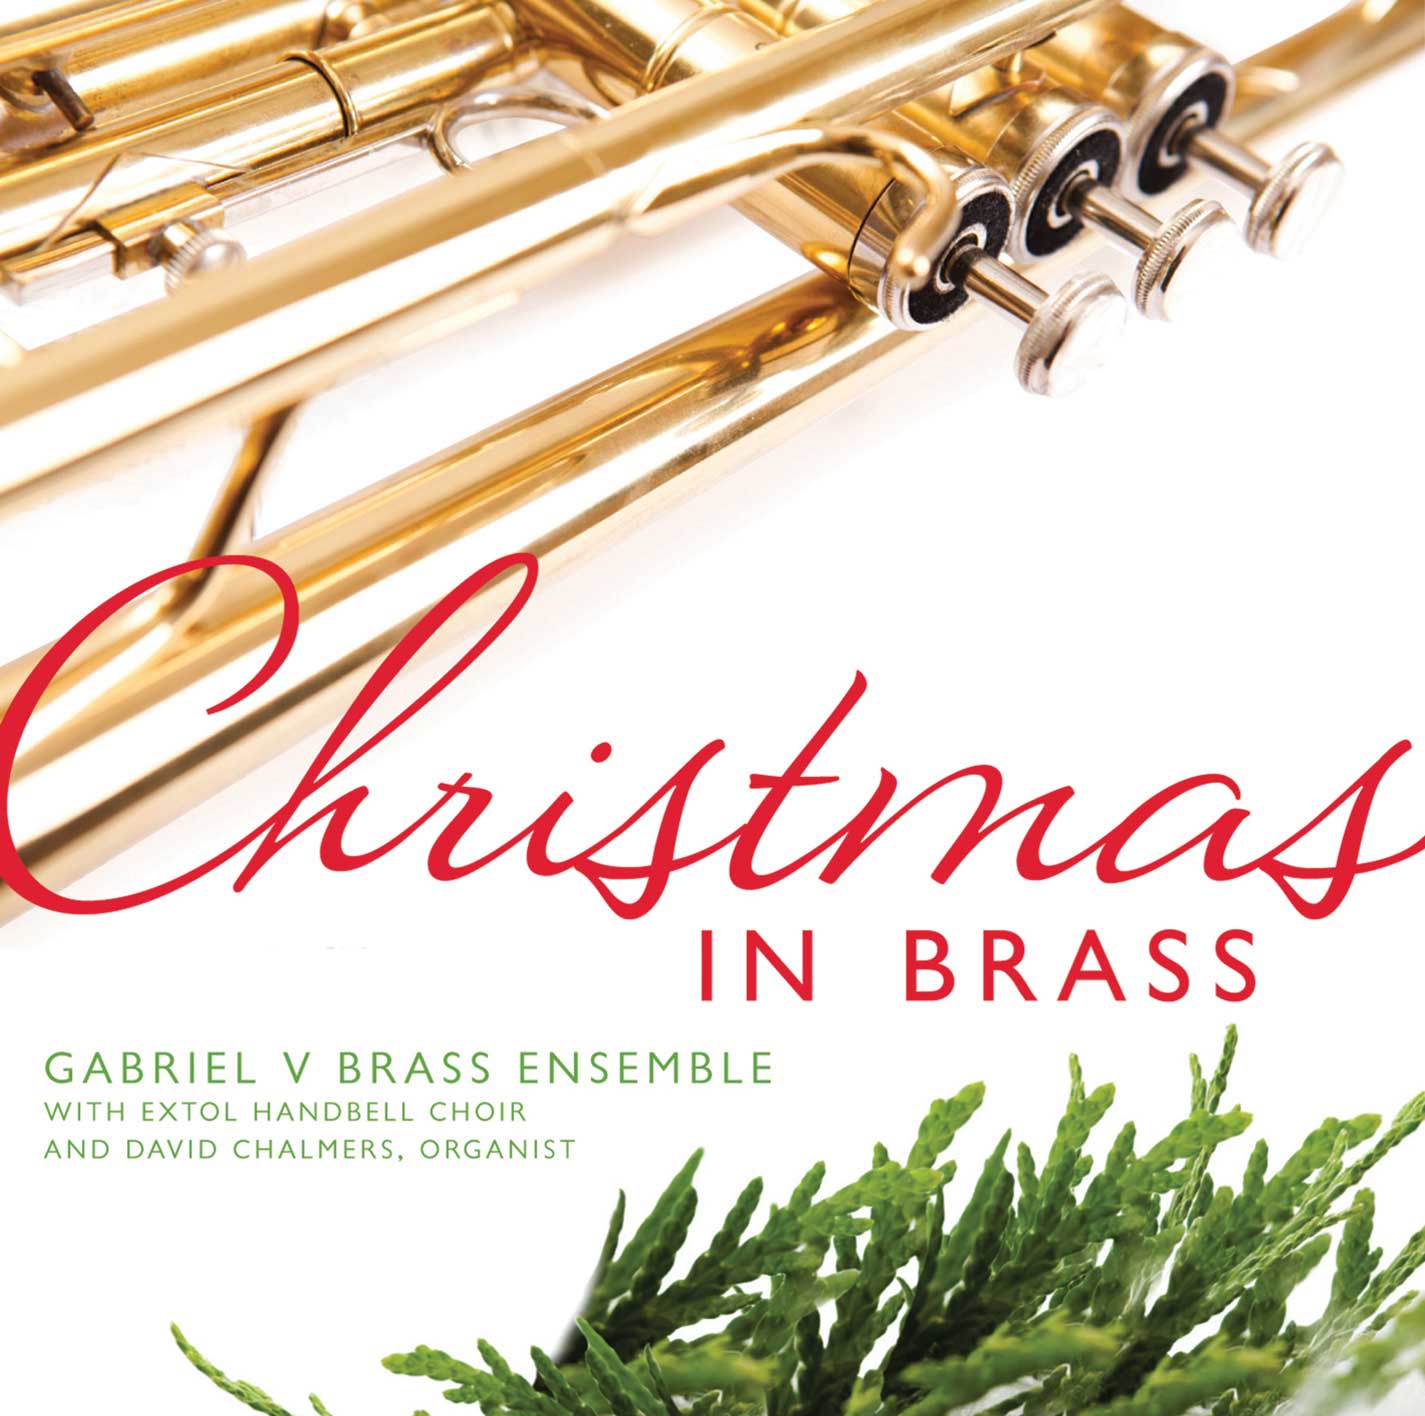 product image of 'Christmas in Brass' Gabriel V Brass Ensemble, Extol Handbell Choir and E.M. Skinner organ recording